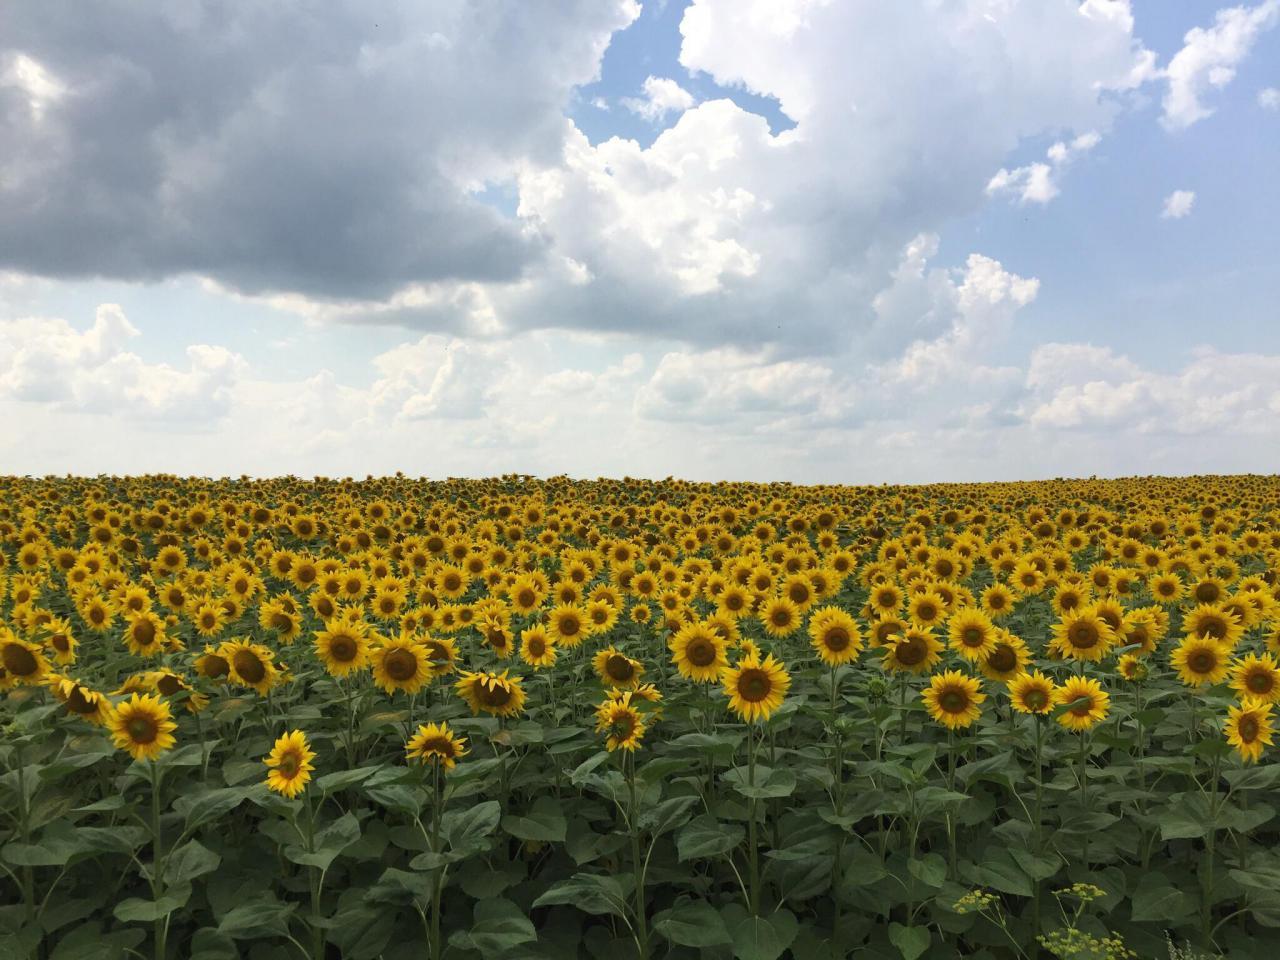 Picture of a sunflower field I took in Ukraine during a biking trip